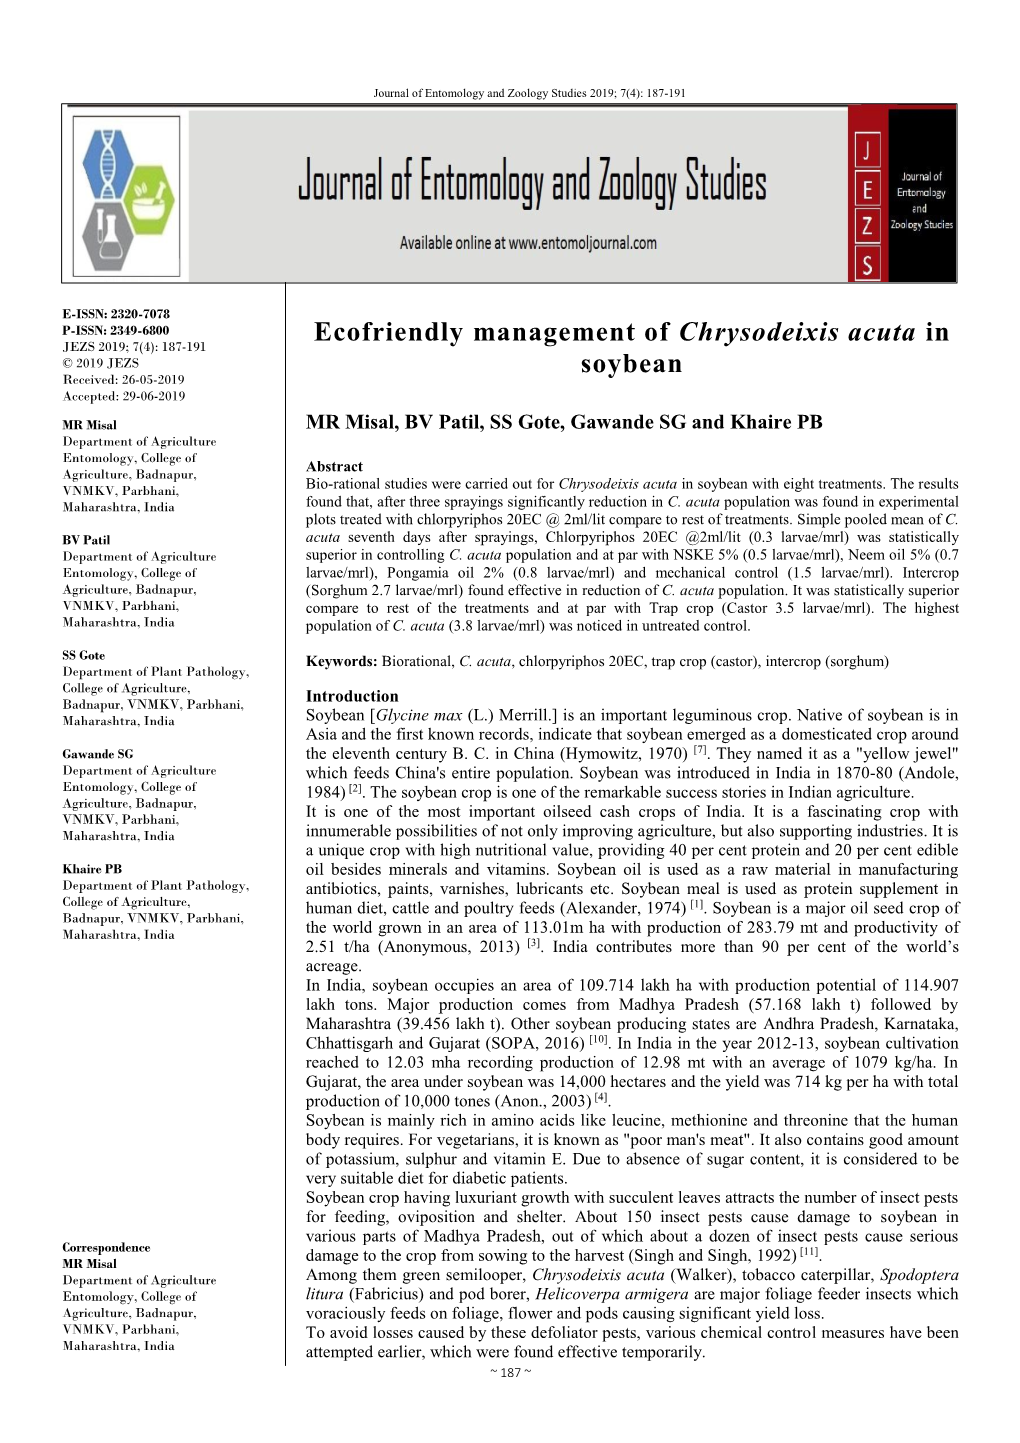 Ecofriendly Management of Chrysodeixis Acuta in Soybean